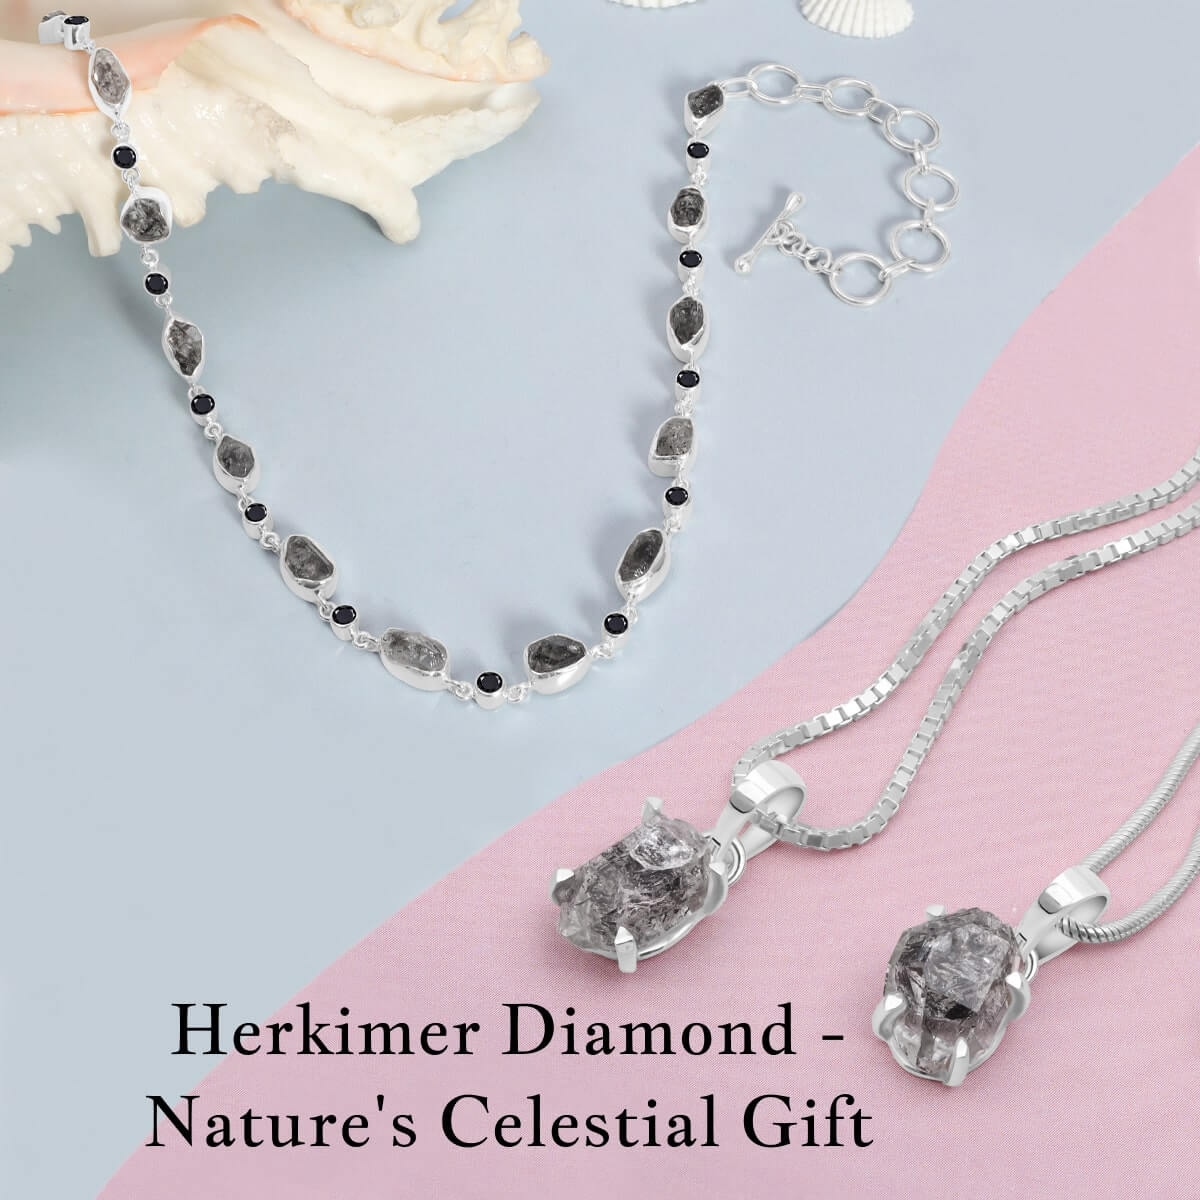 Herkimer Diamond Jewelry Benefits, Healing Properties, Zodiac Signs, Uses, Cost